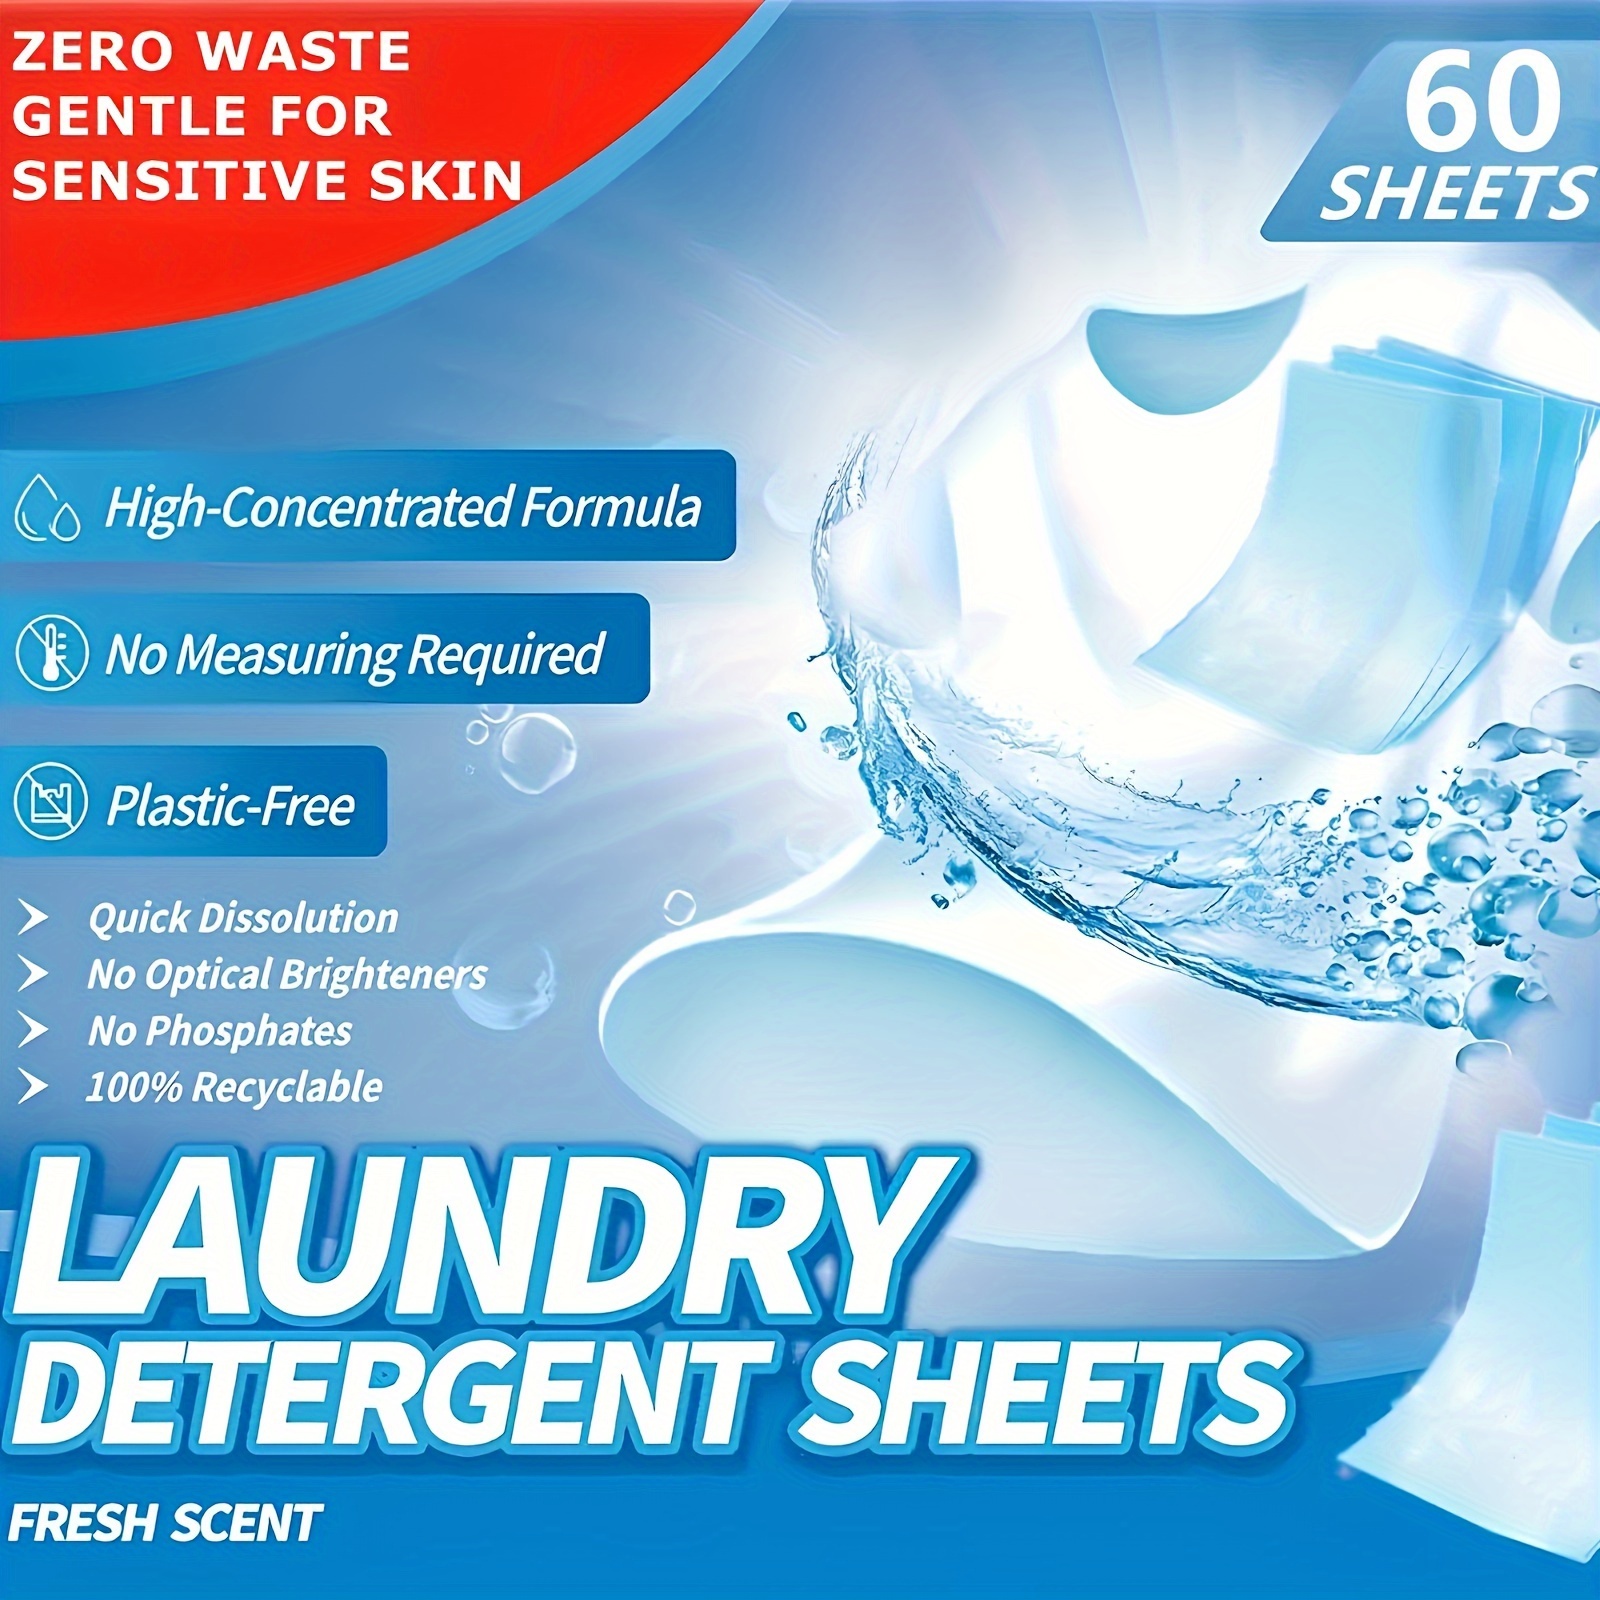 Get Antibacterial Laundry Detergent for Underwear Lavender 300 g